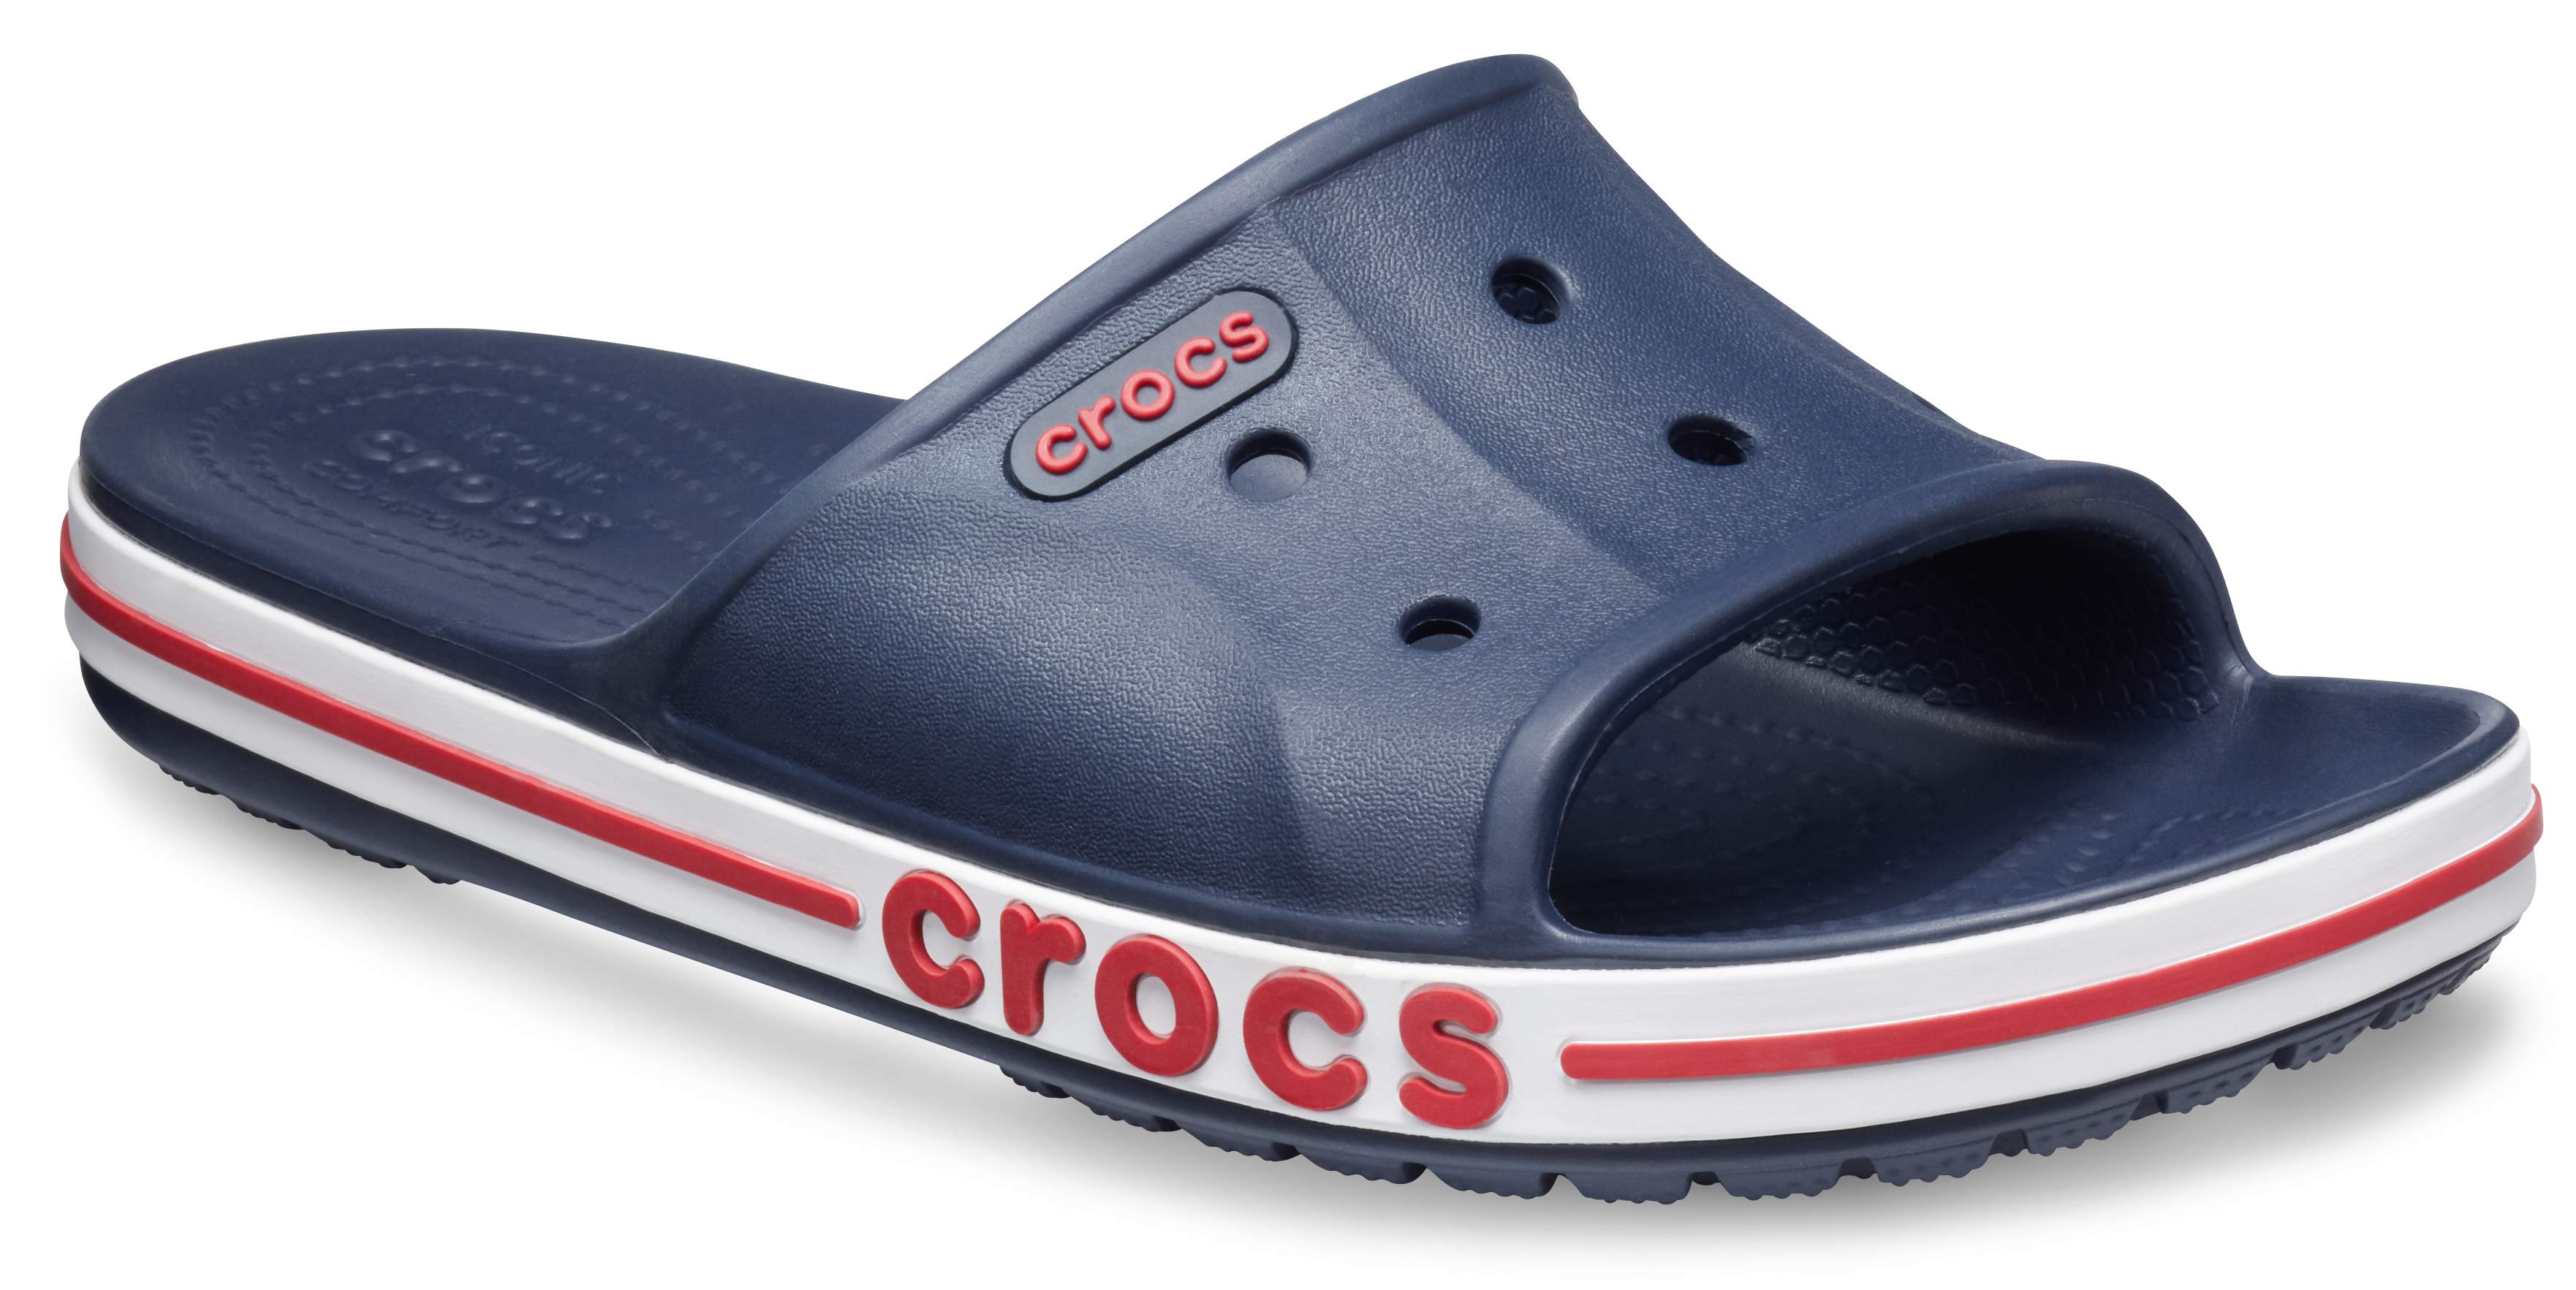 red croc slides